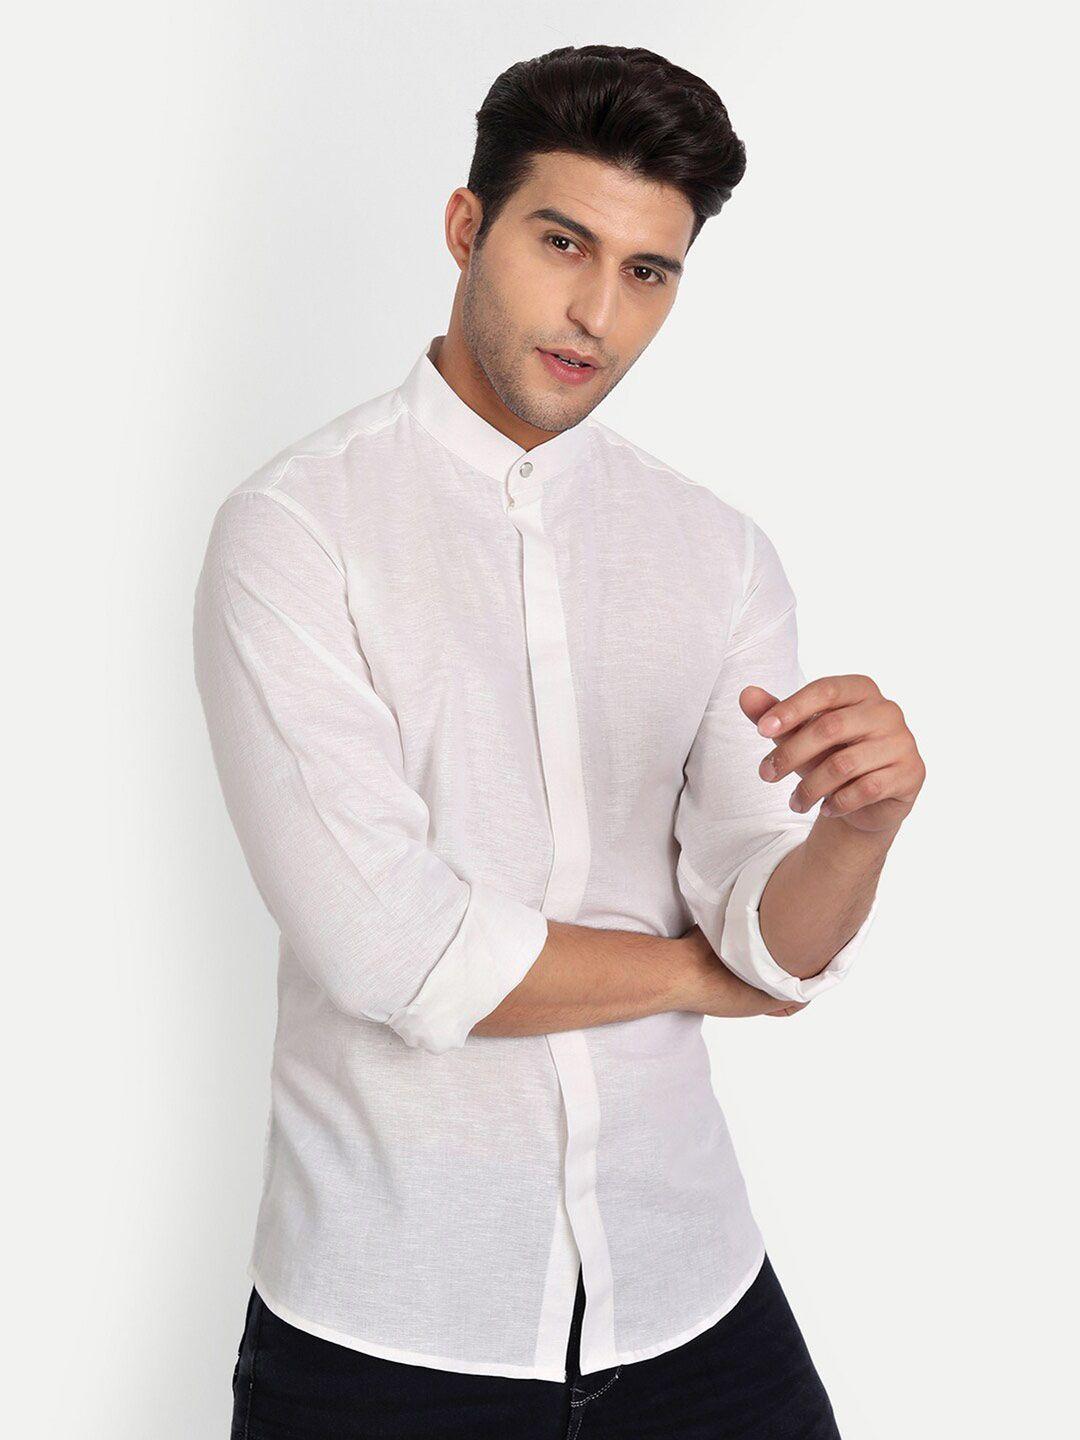 vida loca mandarin collar long sleeves straight slim fit opaque cotton casual shirt